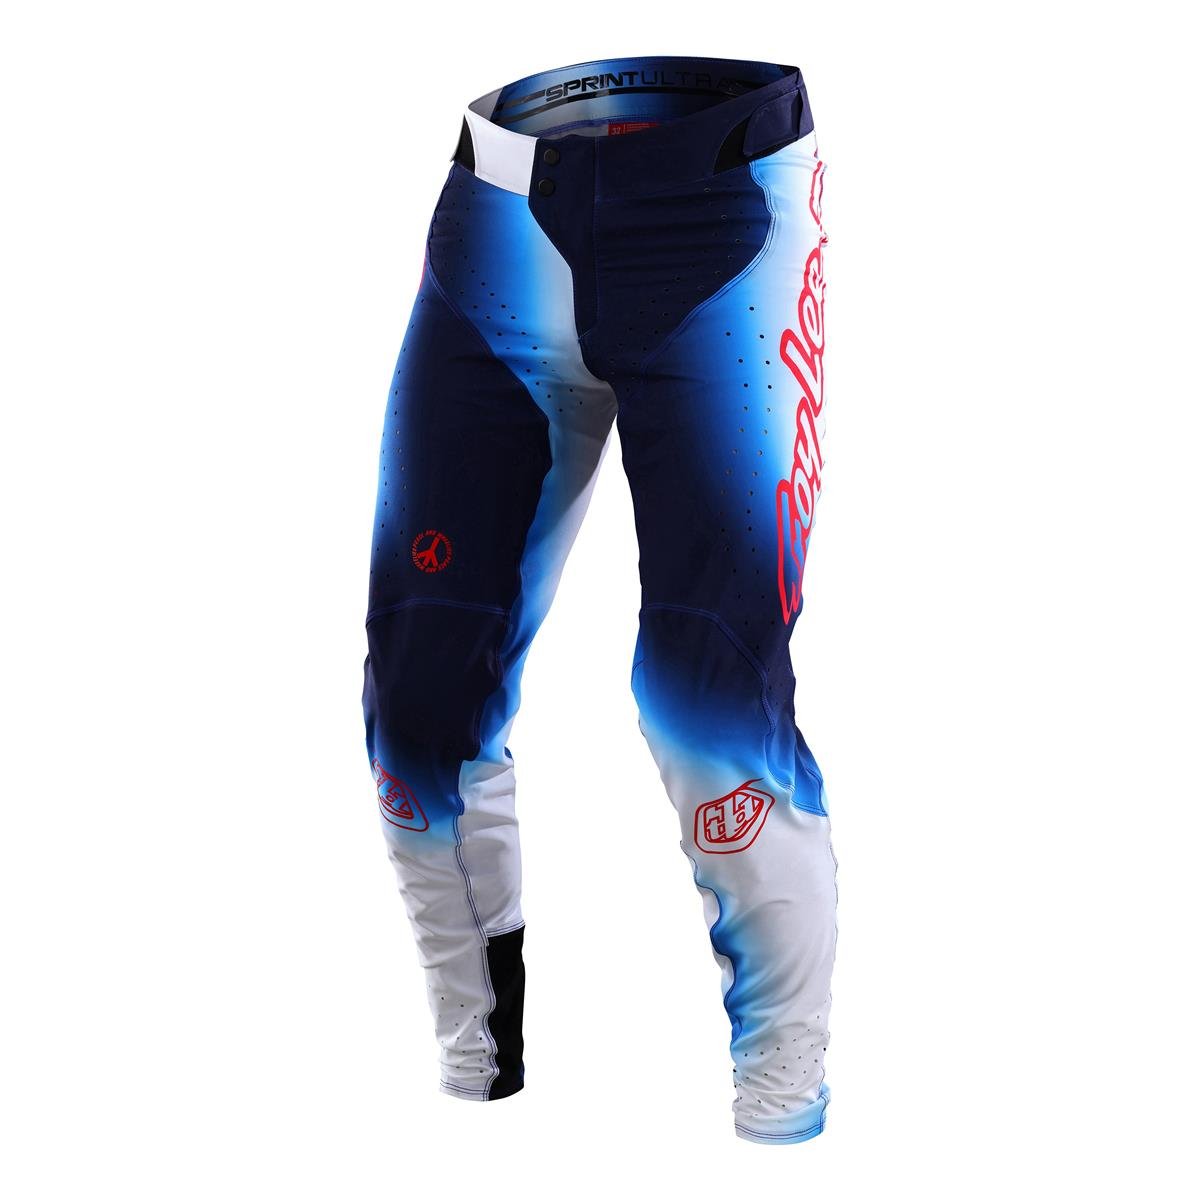 Troy Lee Designs MTB Pants Sprint Ultra Lucid  WhiteBlue  Maciag Offroad